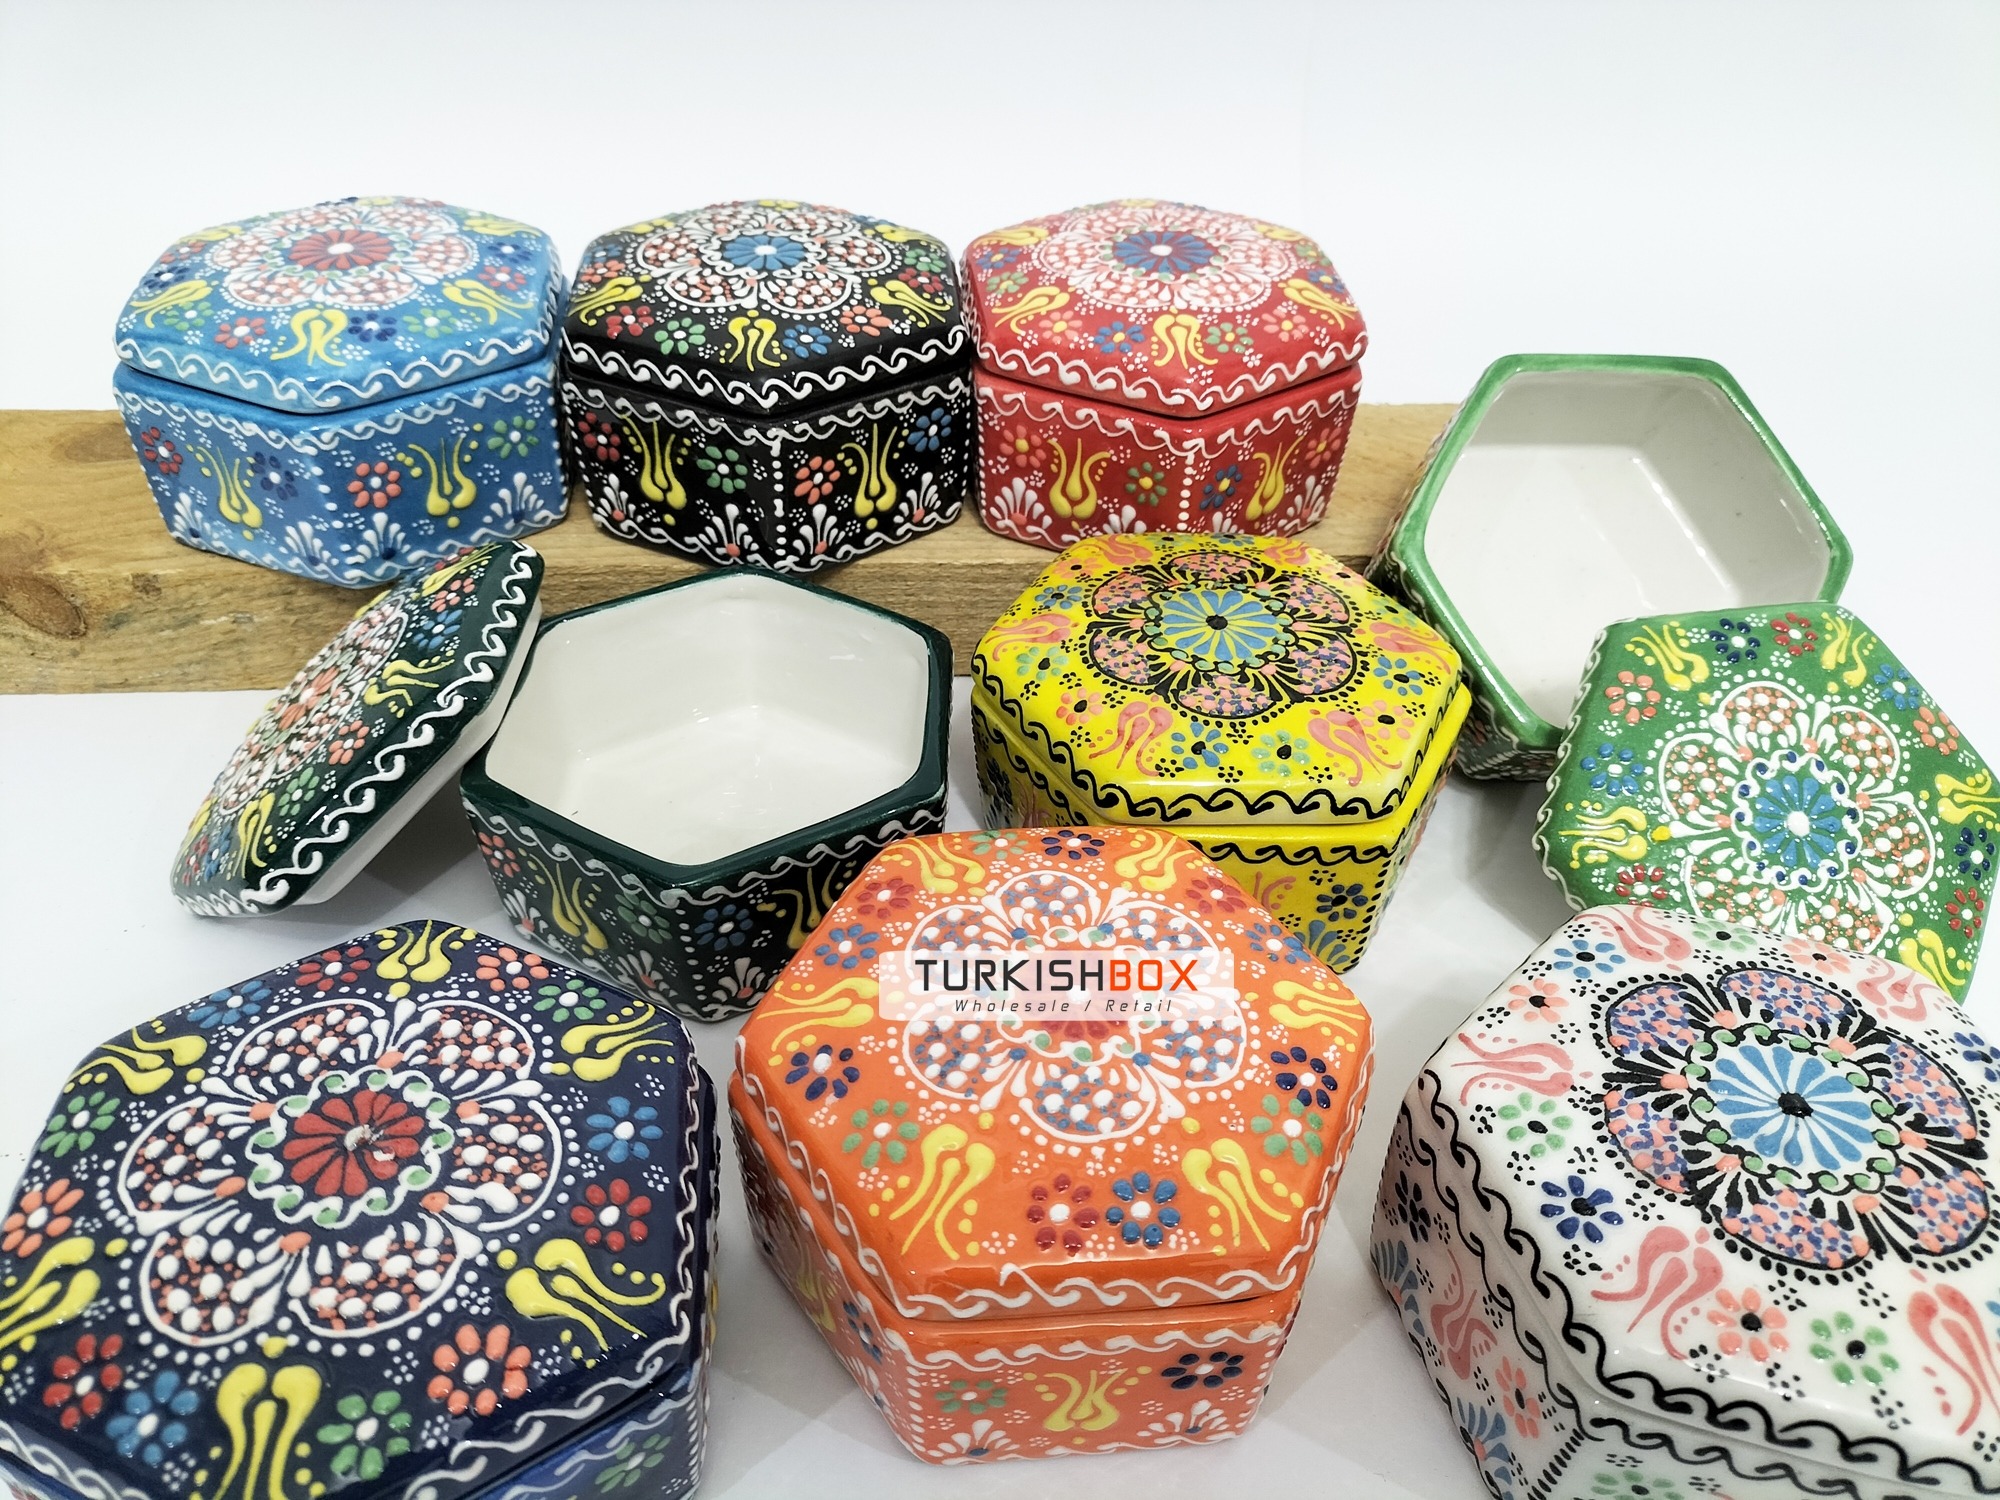 https://turkishbox.com/wholesale/wp-content/uploads/sites/2/2022/05/Wholesale-Ceramic-Jewelry-Case-Sugar-Bowl.jpg